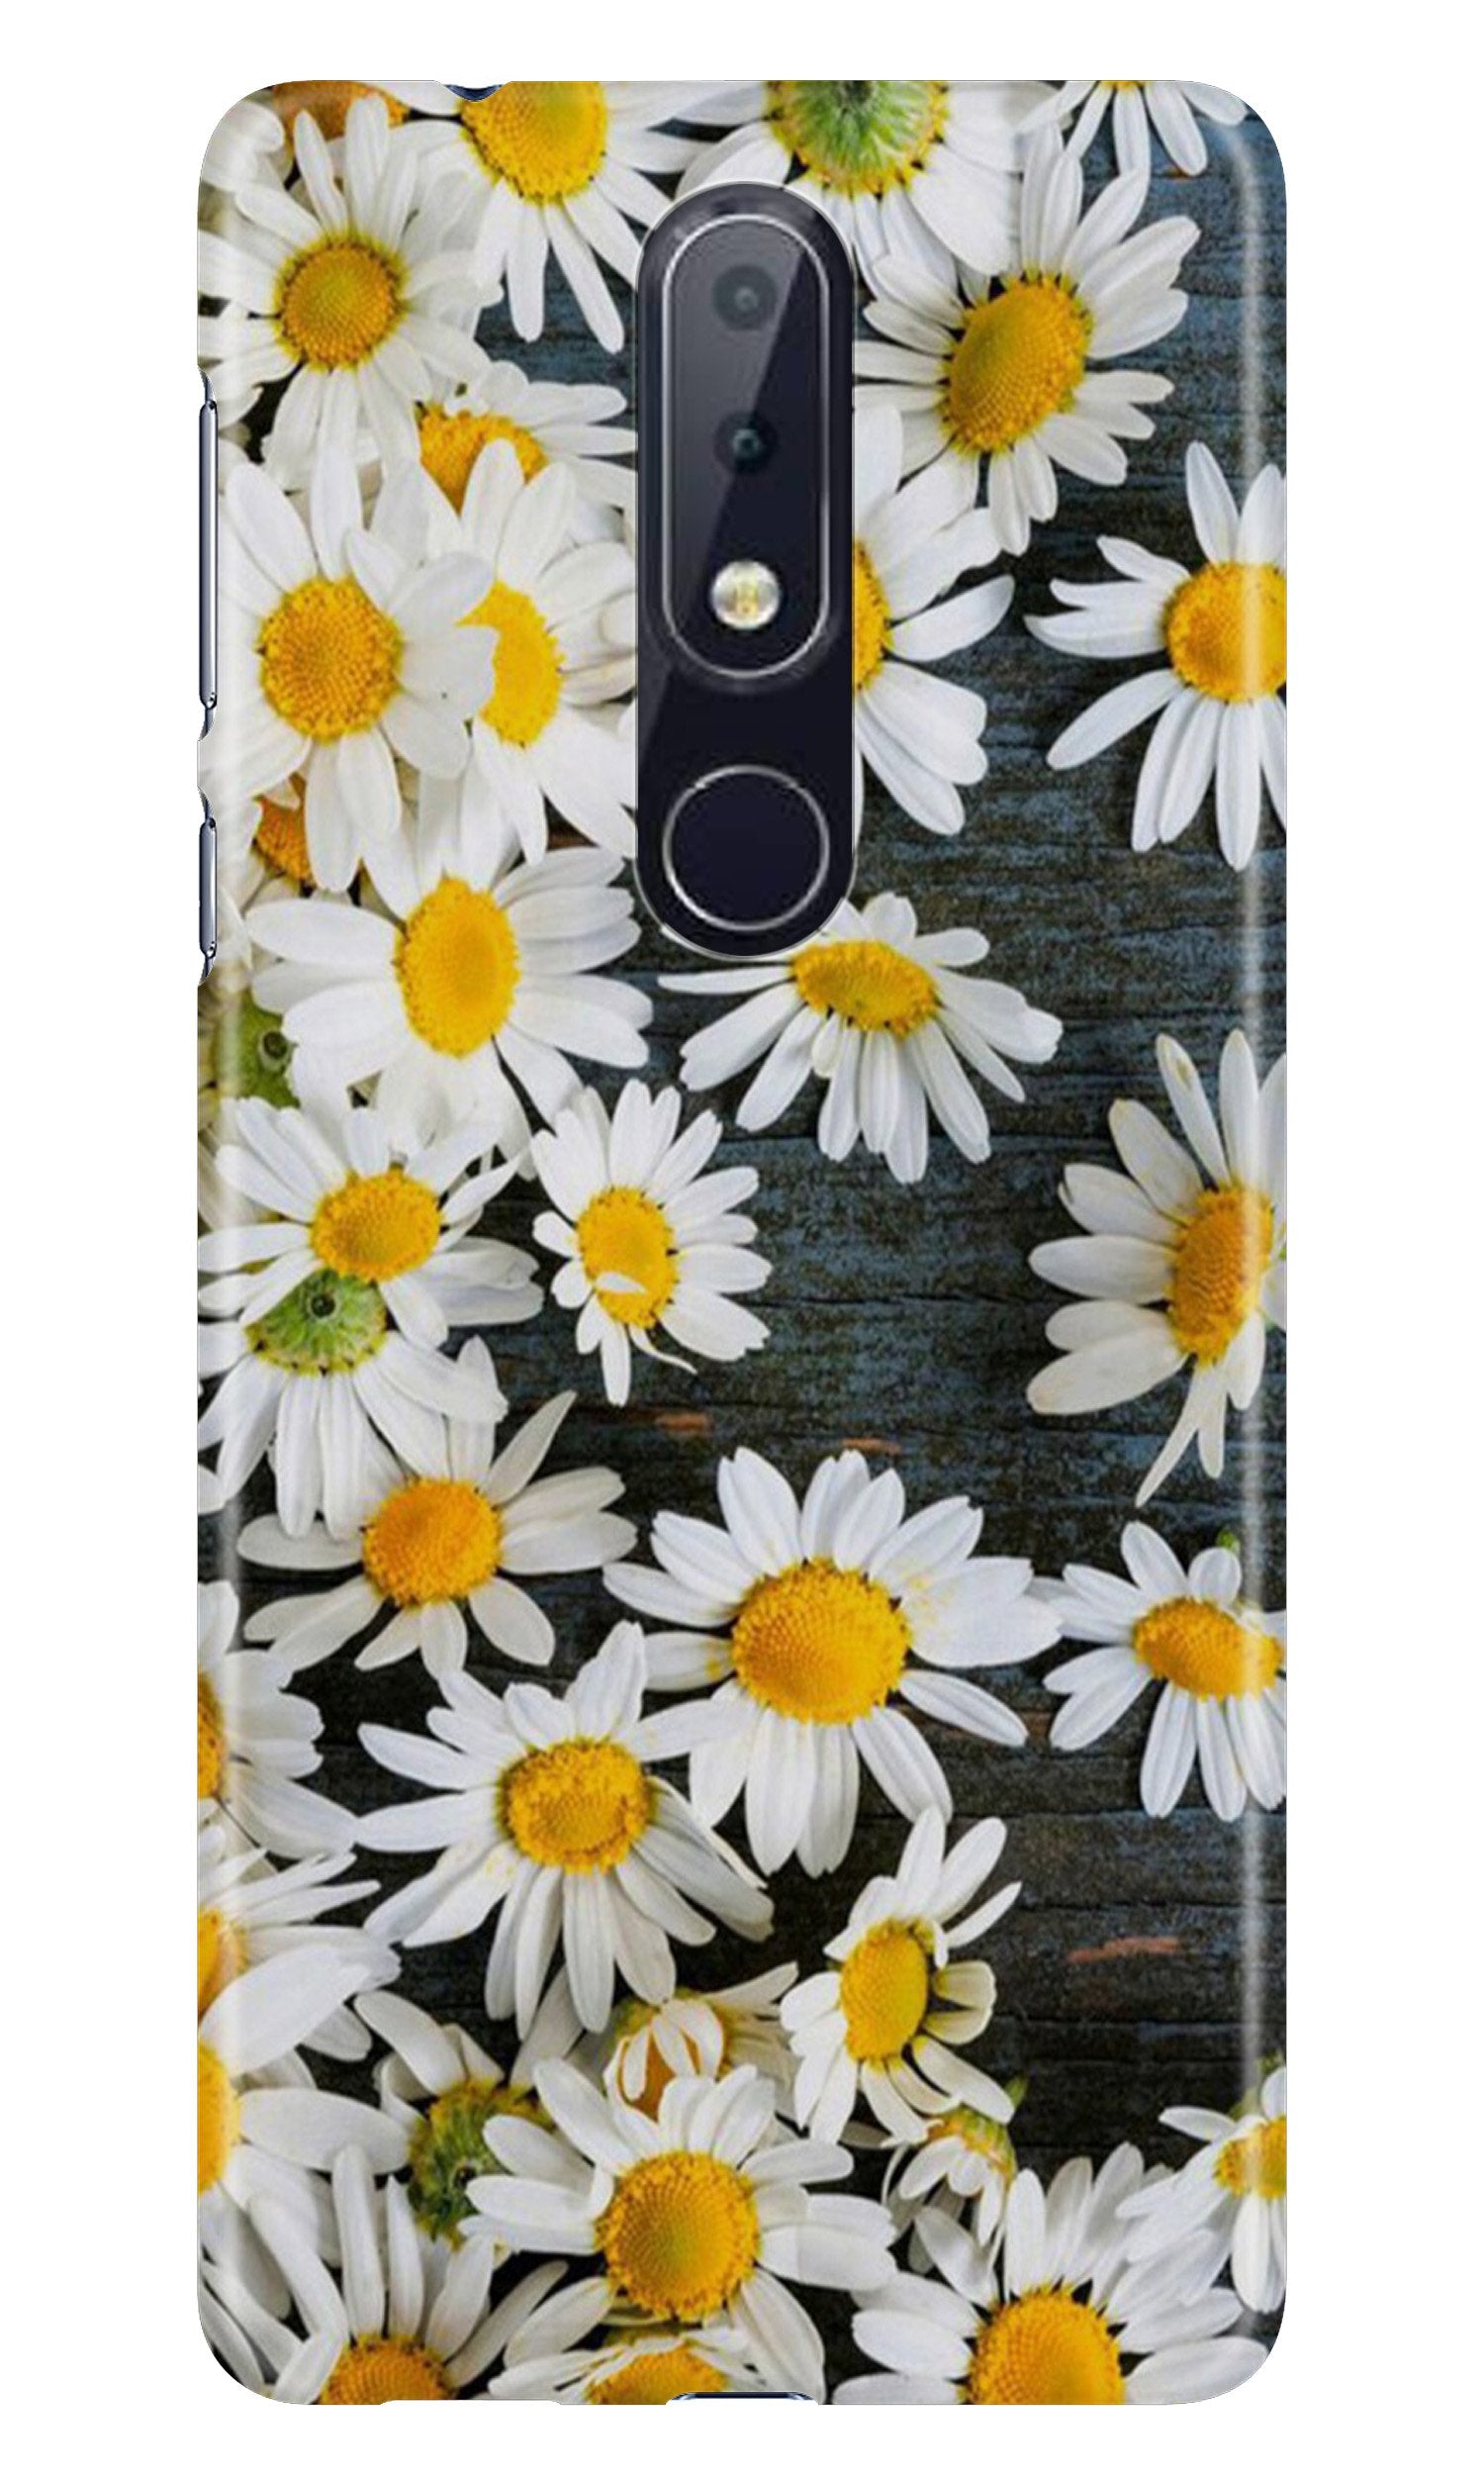 White flowers2 Case for Nokia 4.2